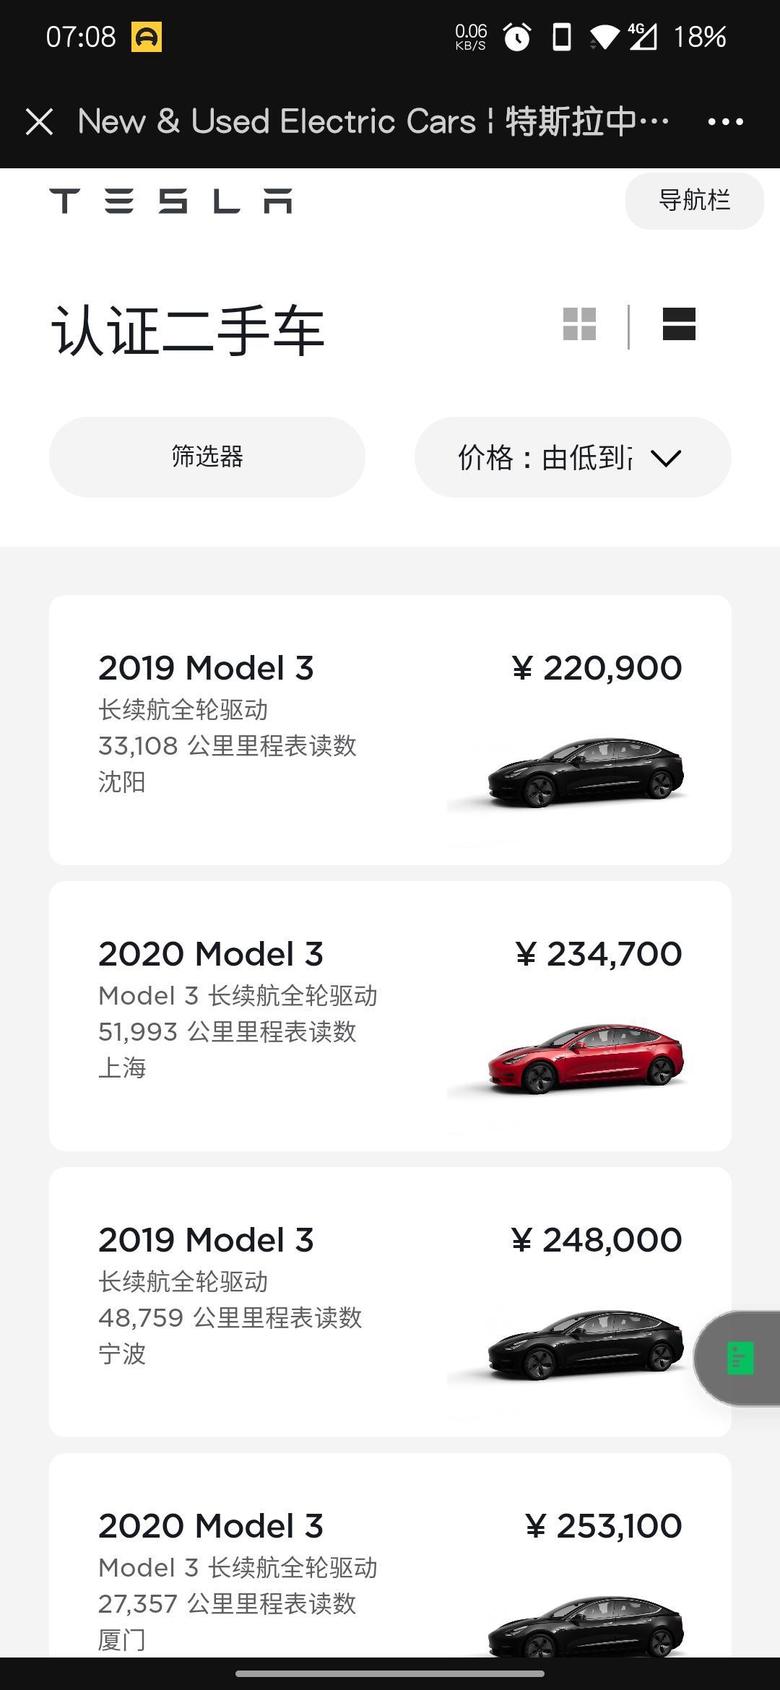 model 3 特斯拉官方认证二手车，能不能放心买？有什么注意事项吗？